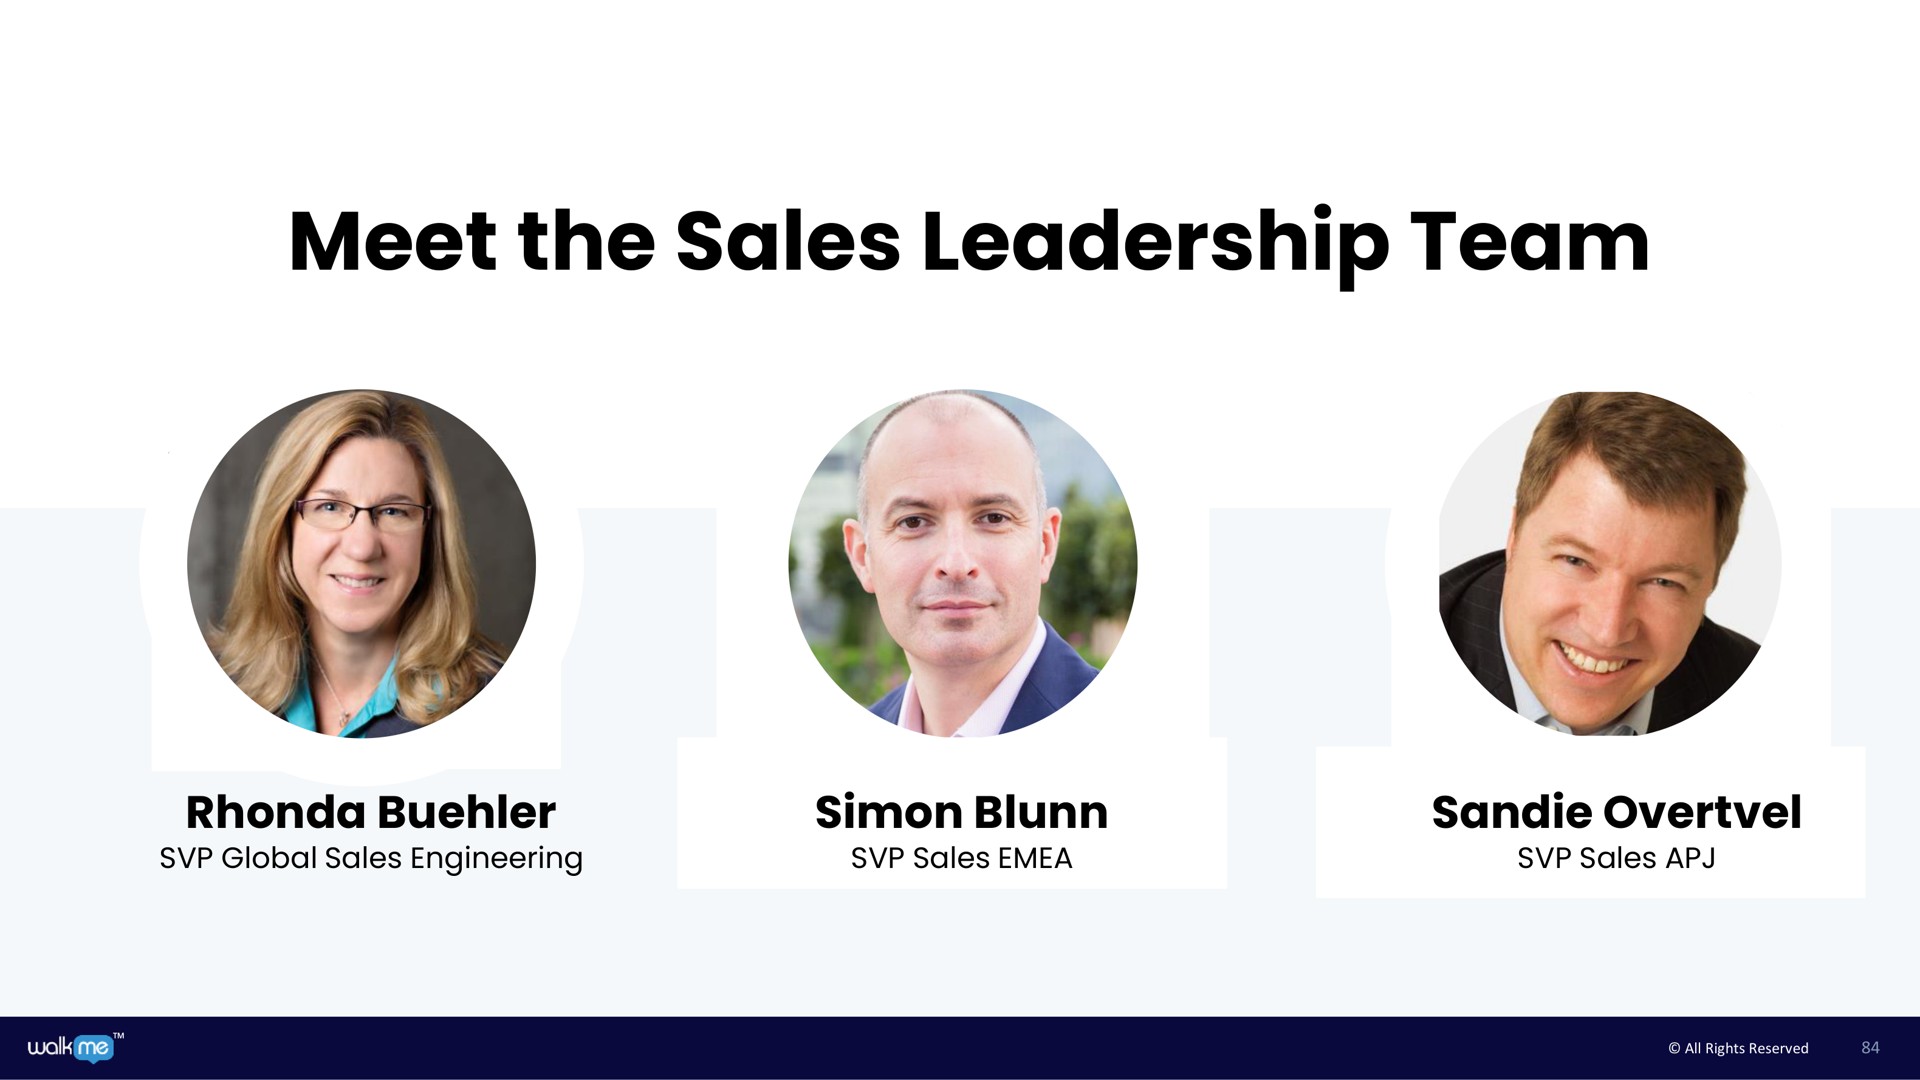 meet the sales leadership team | Walkme